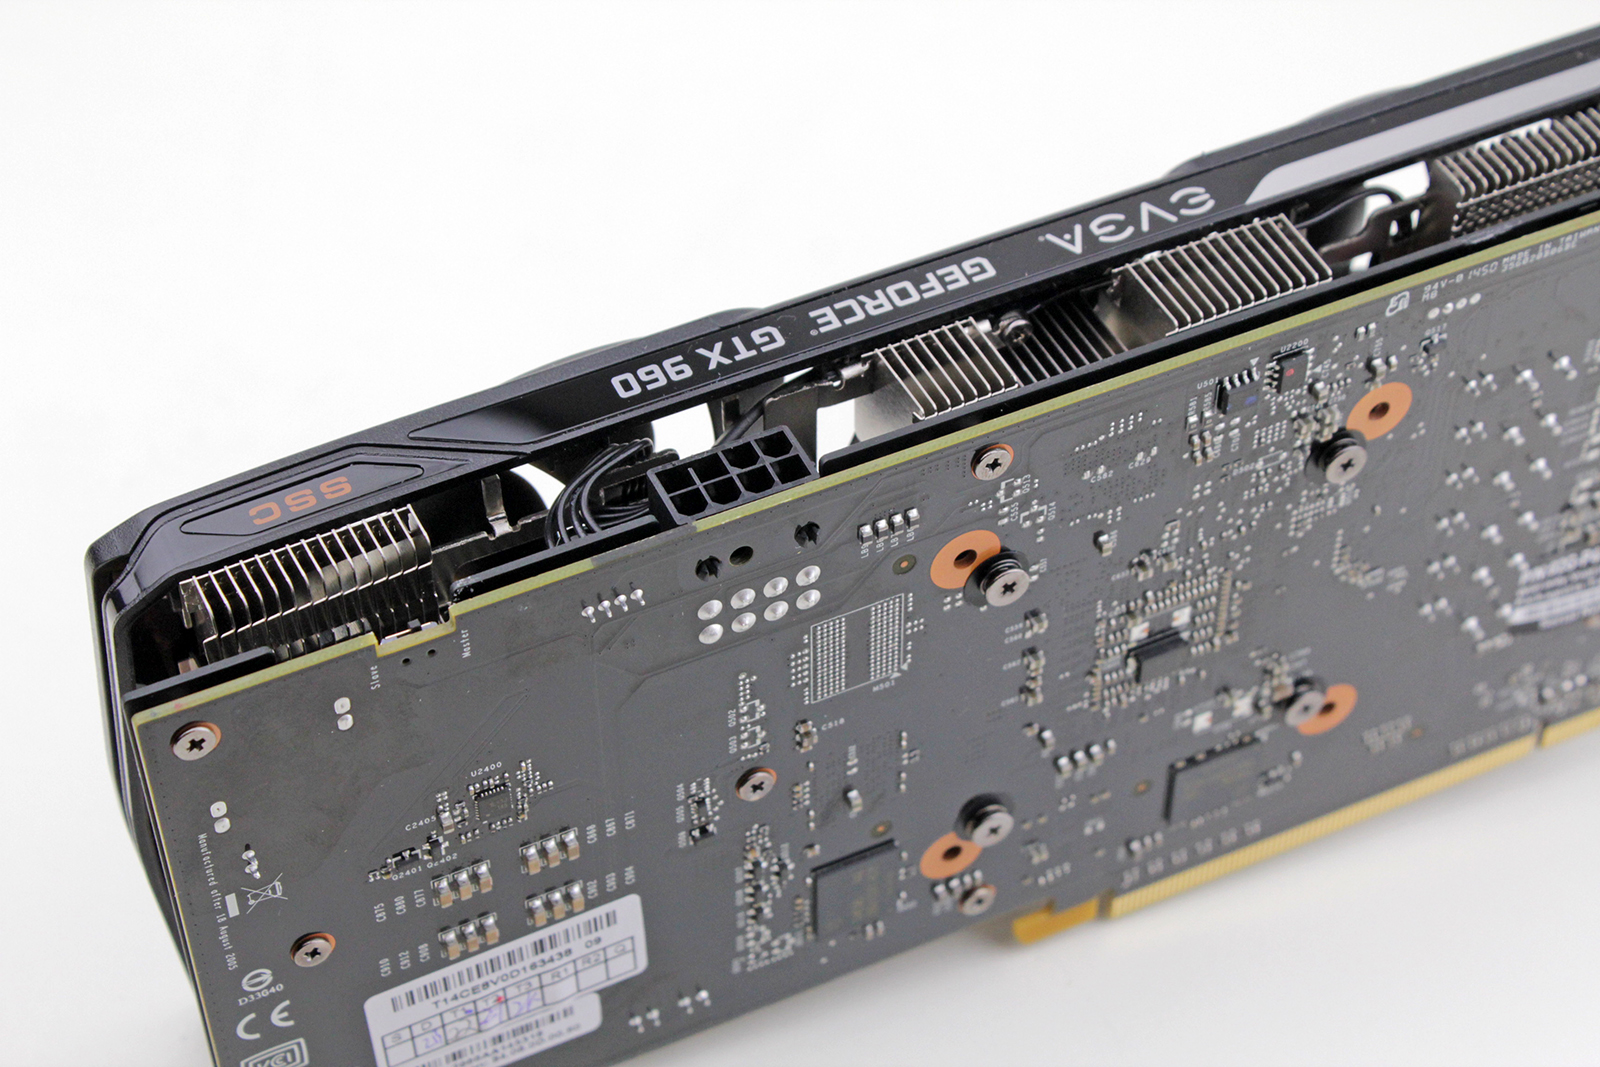 Evga Geforce Gtx 960 Supersc Acx 2 0 Reviewed